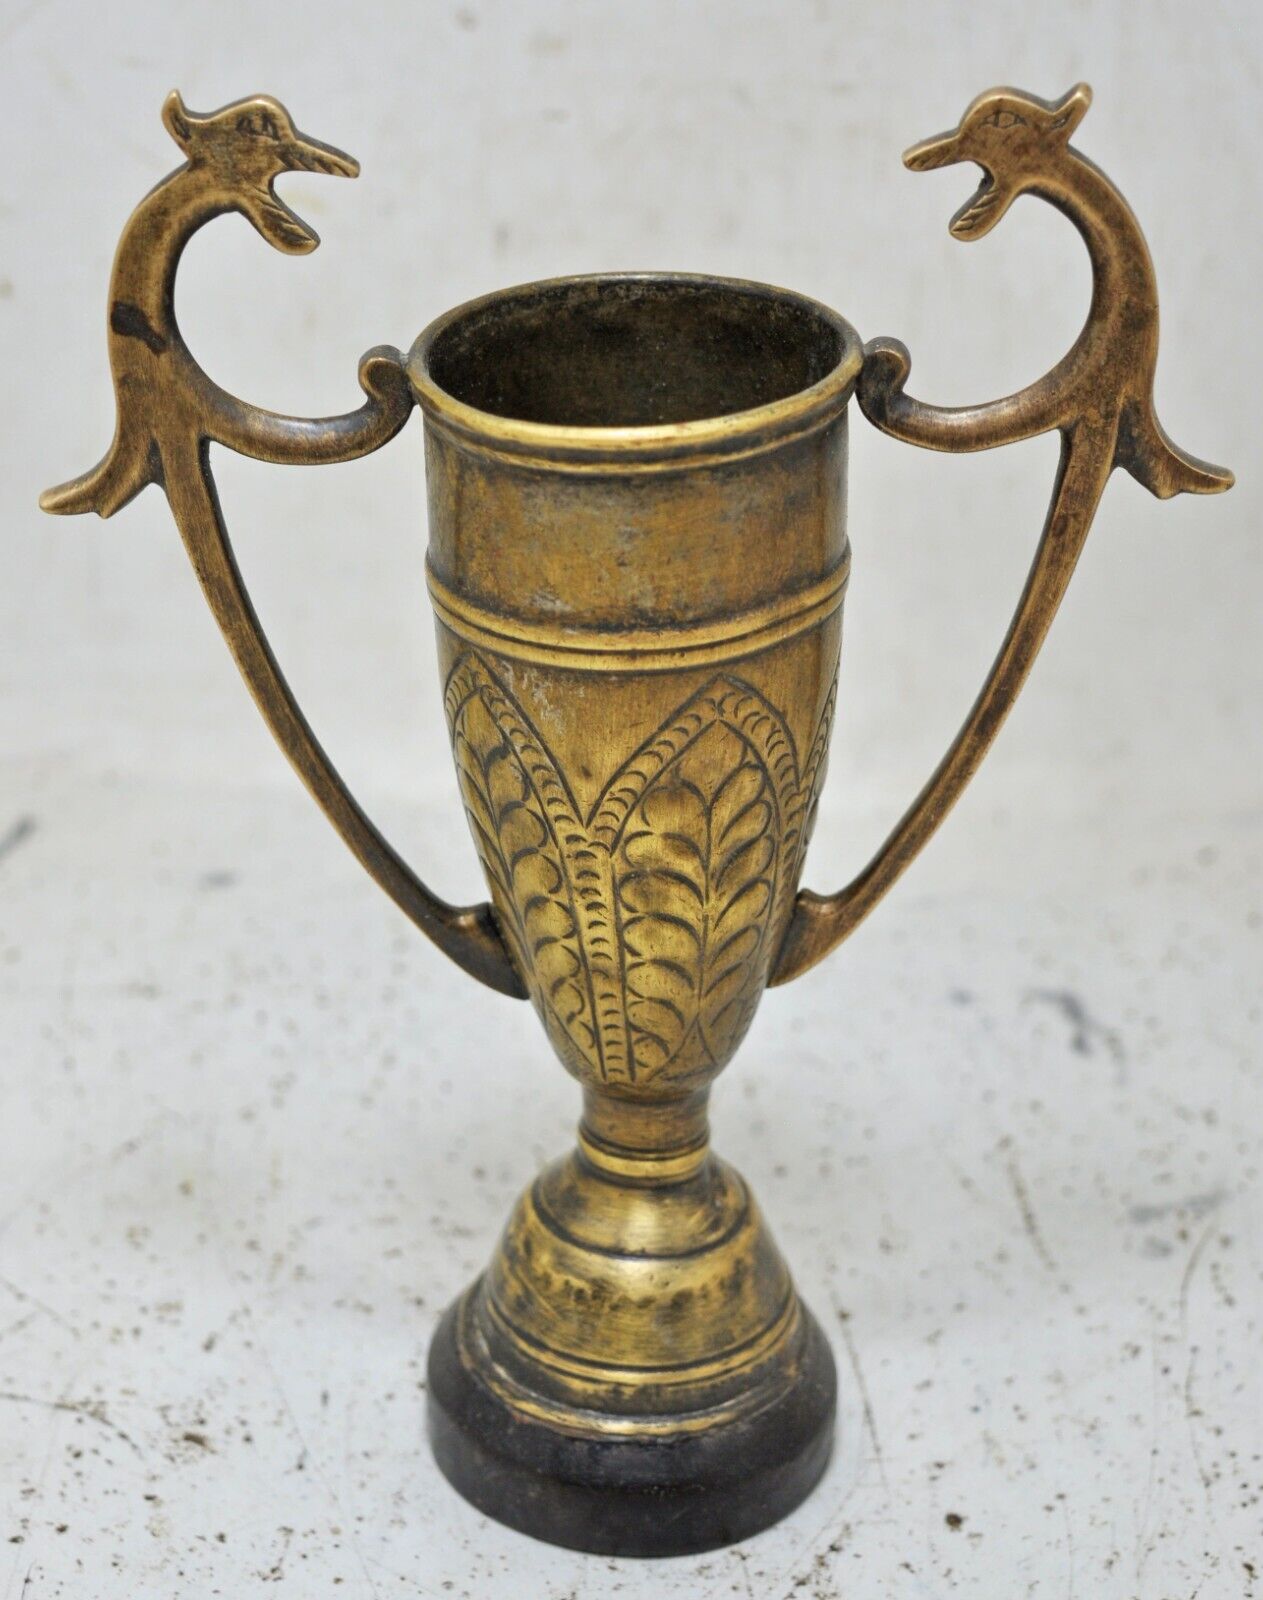 Vintage Brass Prize Trophy Cup Original Old Hand Crafted Engraved